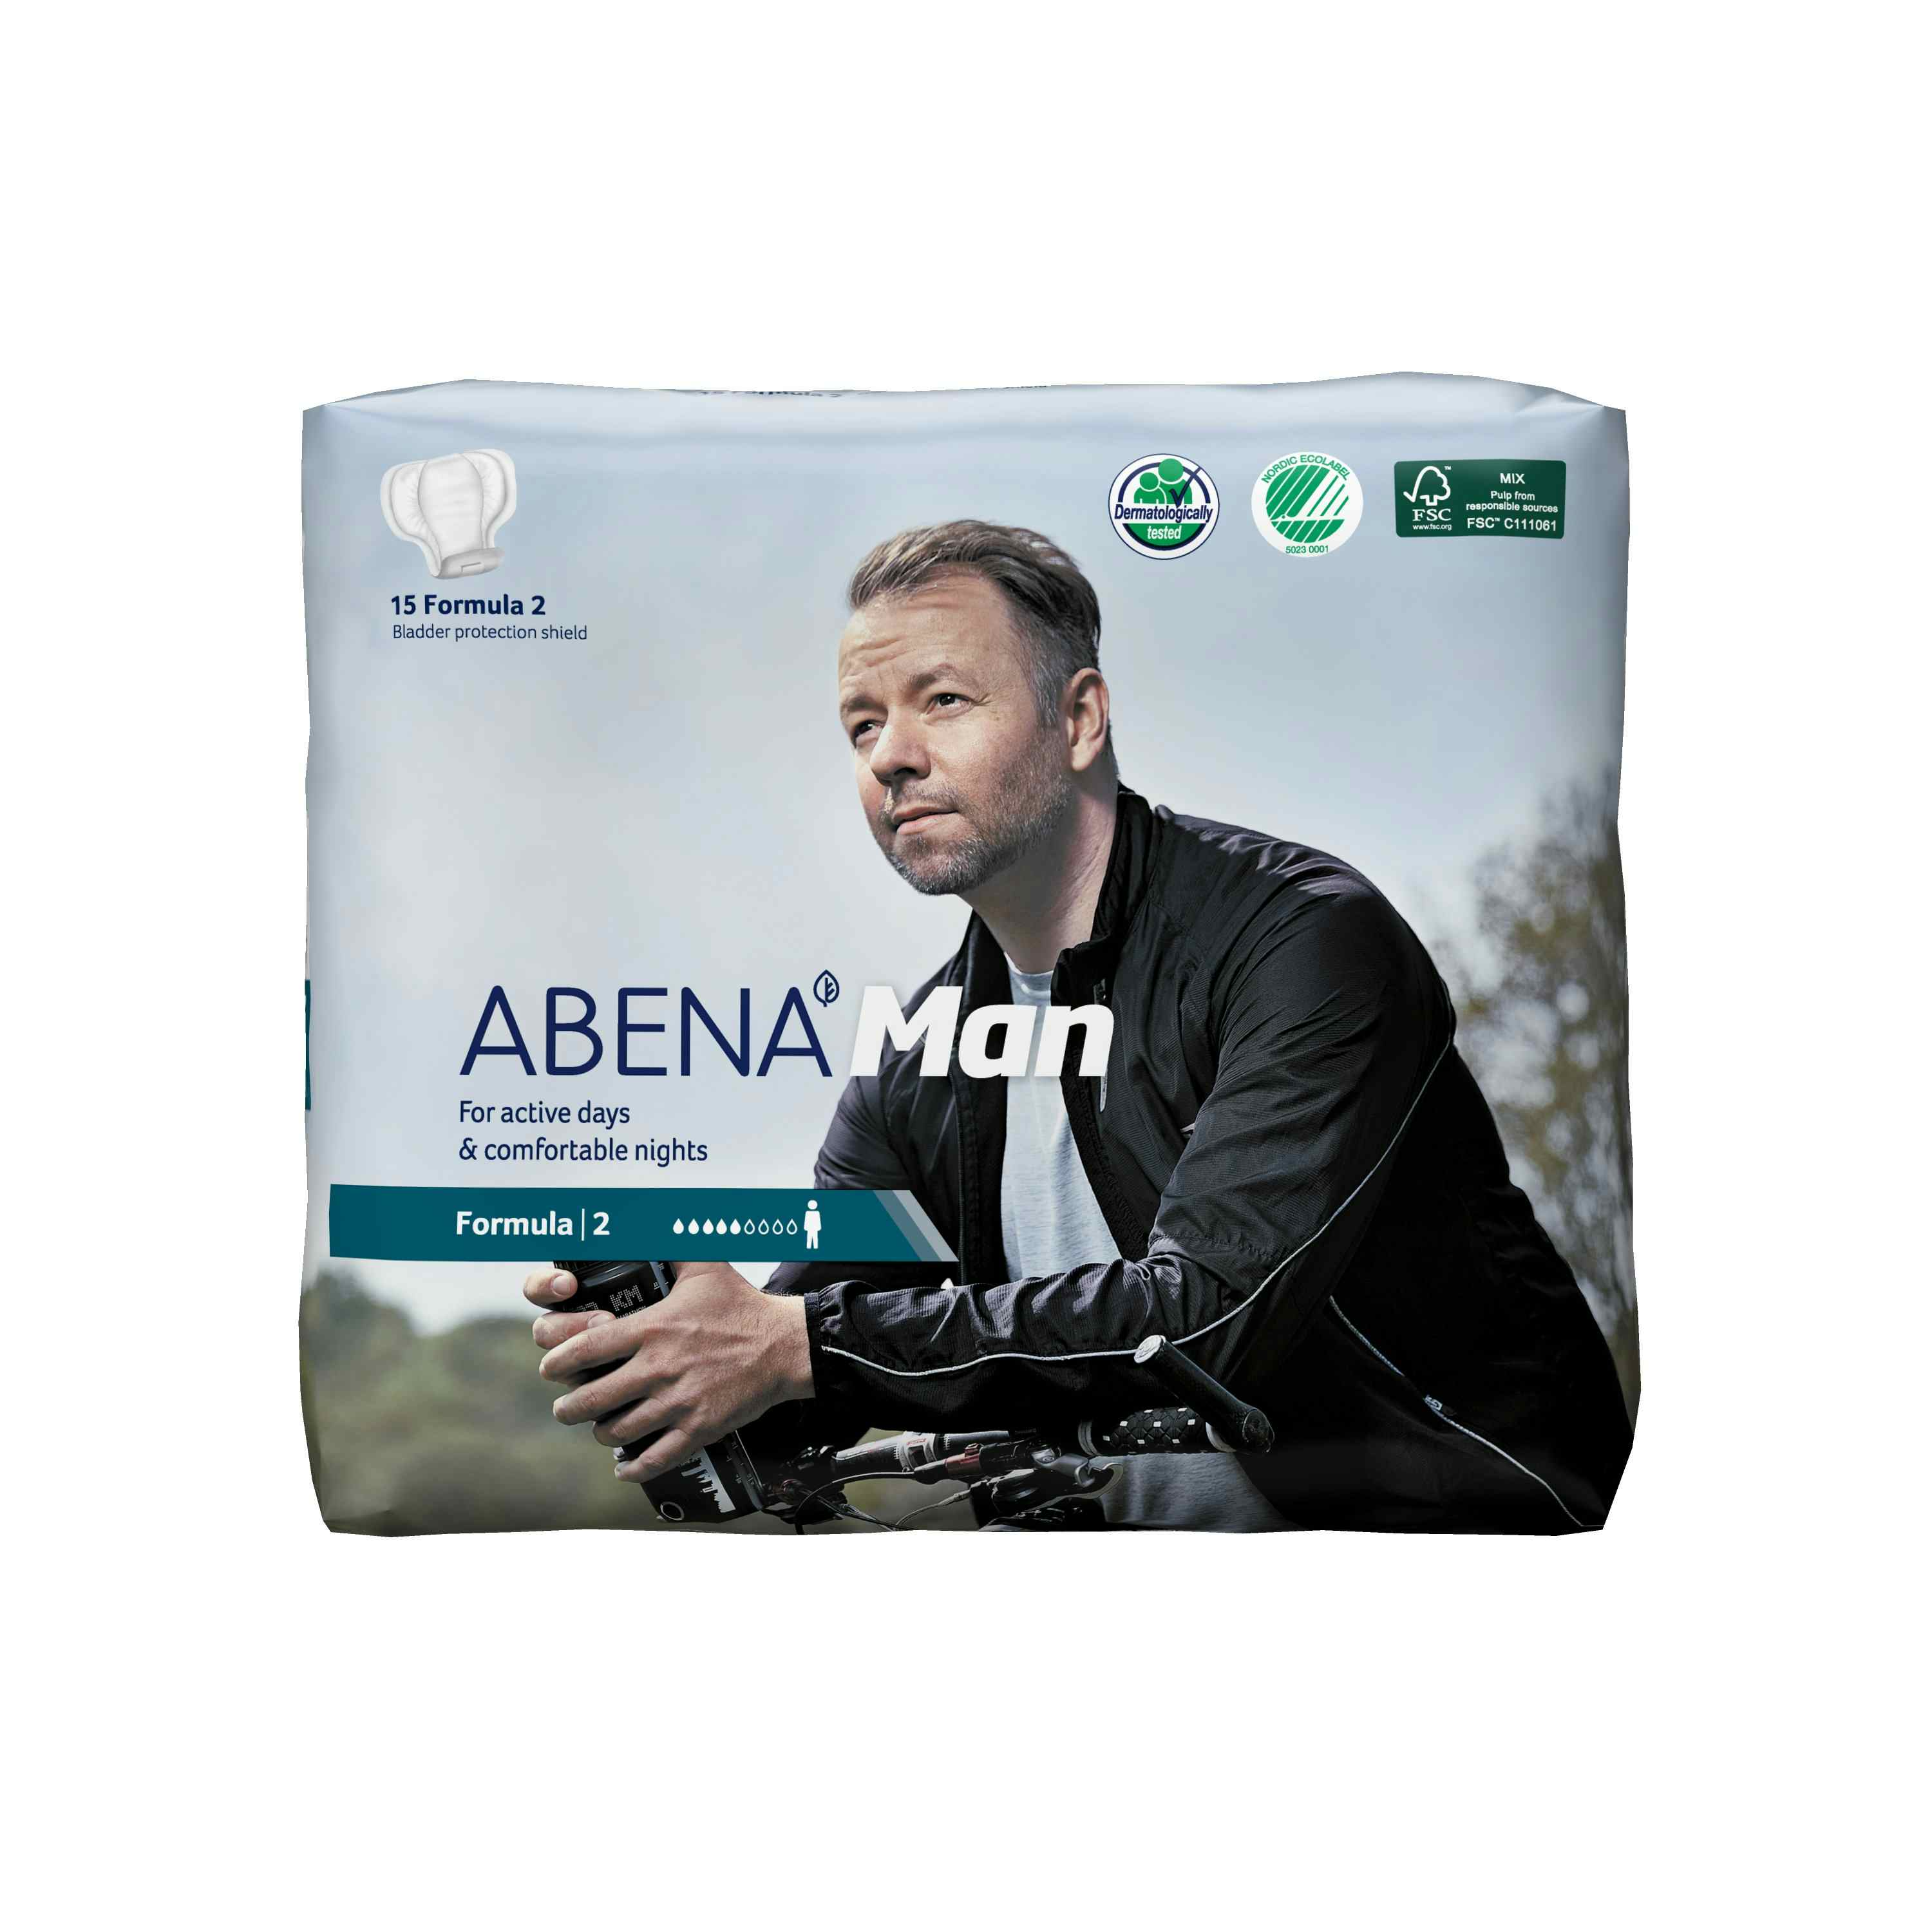  Abena-Man Adult Male Disposable Bladder Control Pad, Light Absorbency, 1000017163, Formula 2 (11") - Bag of 15